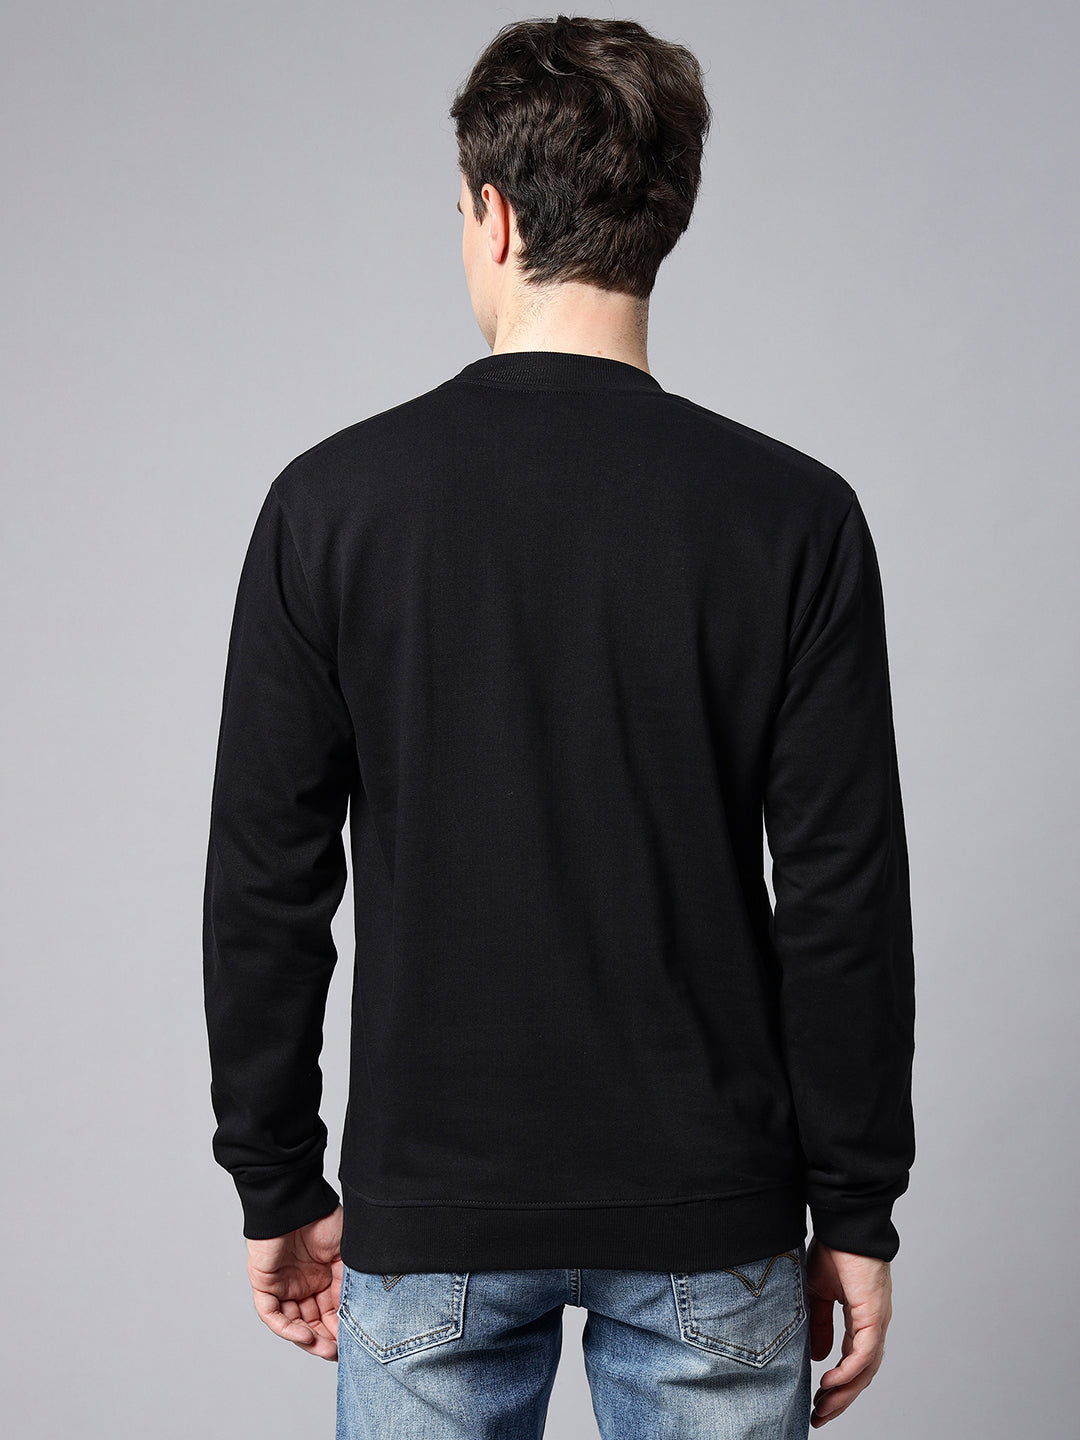 Dark Black Sweatshirt